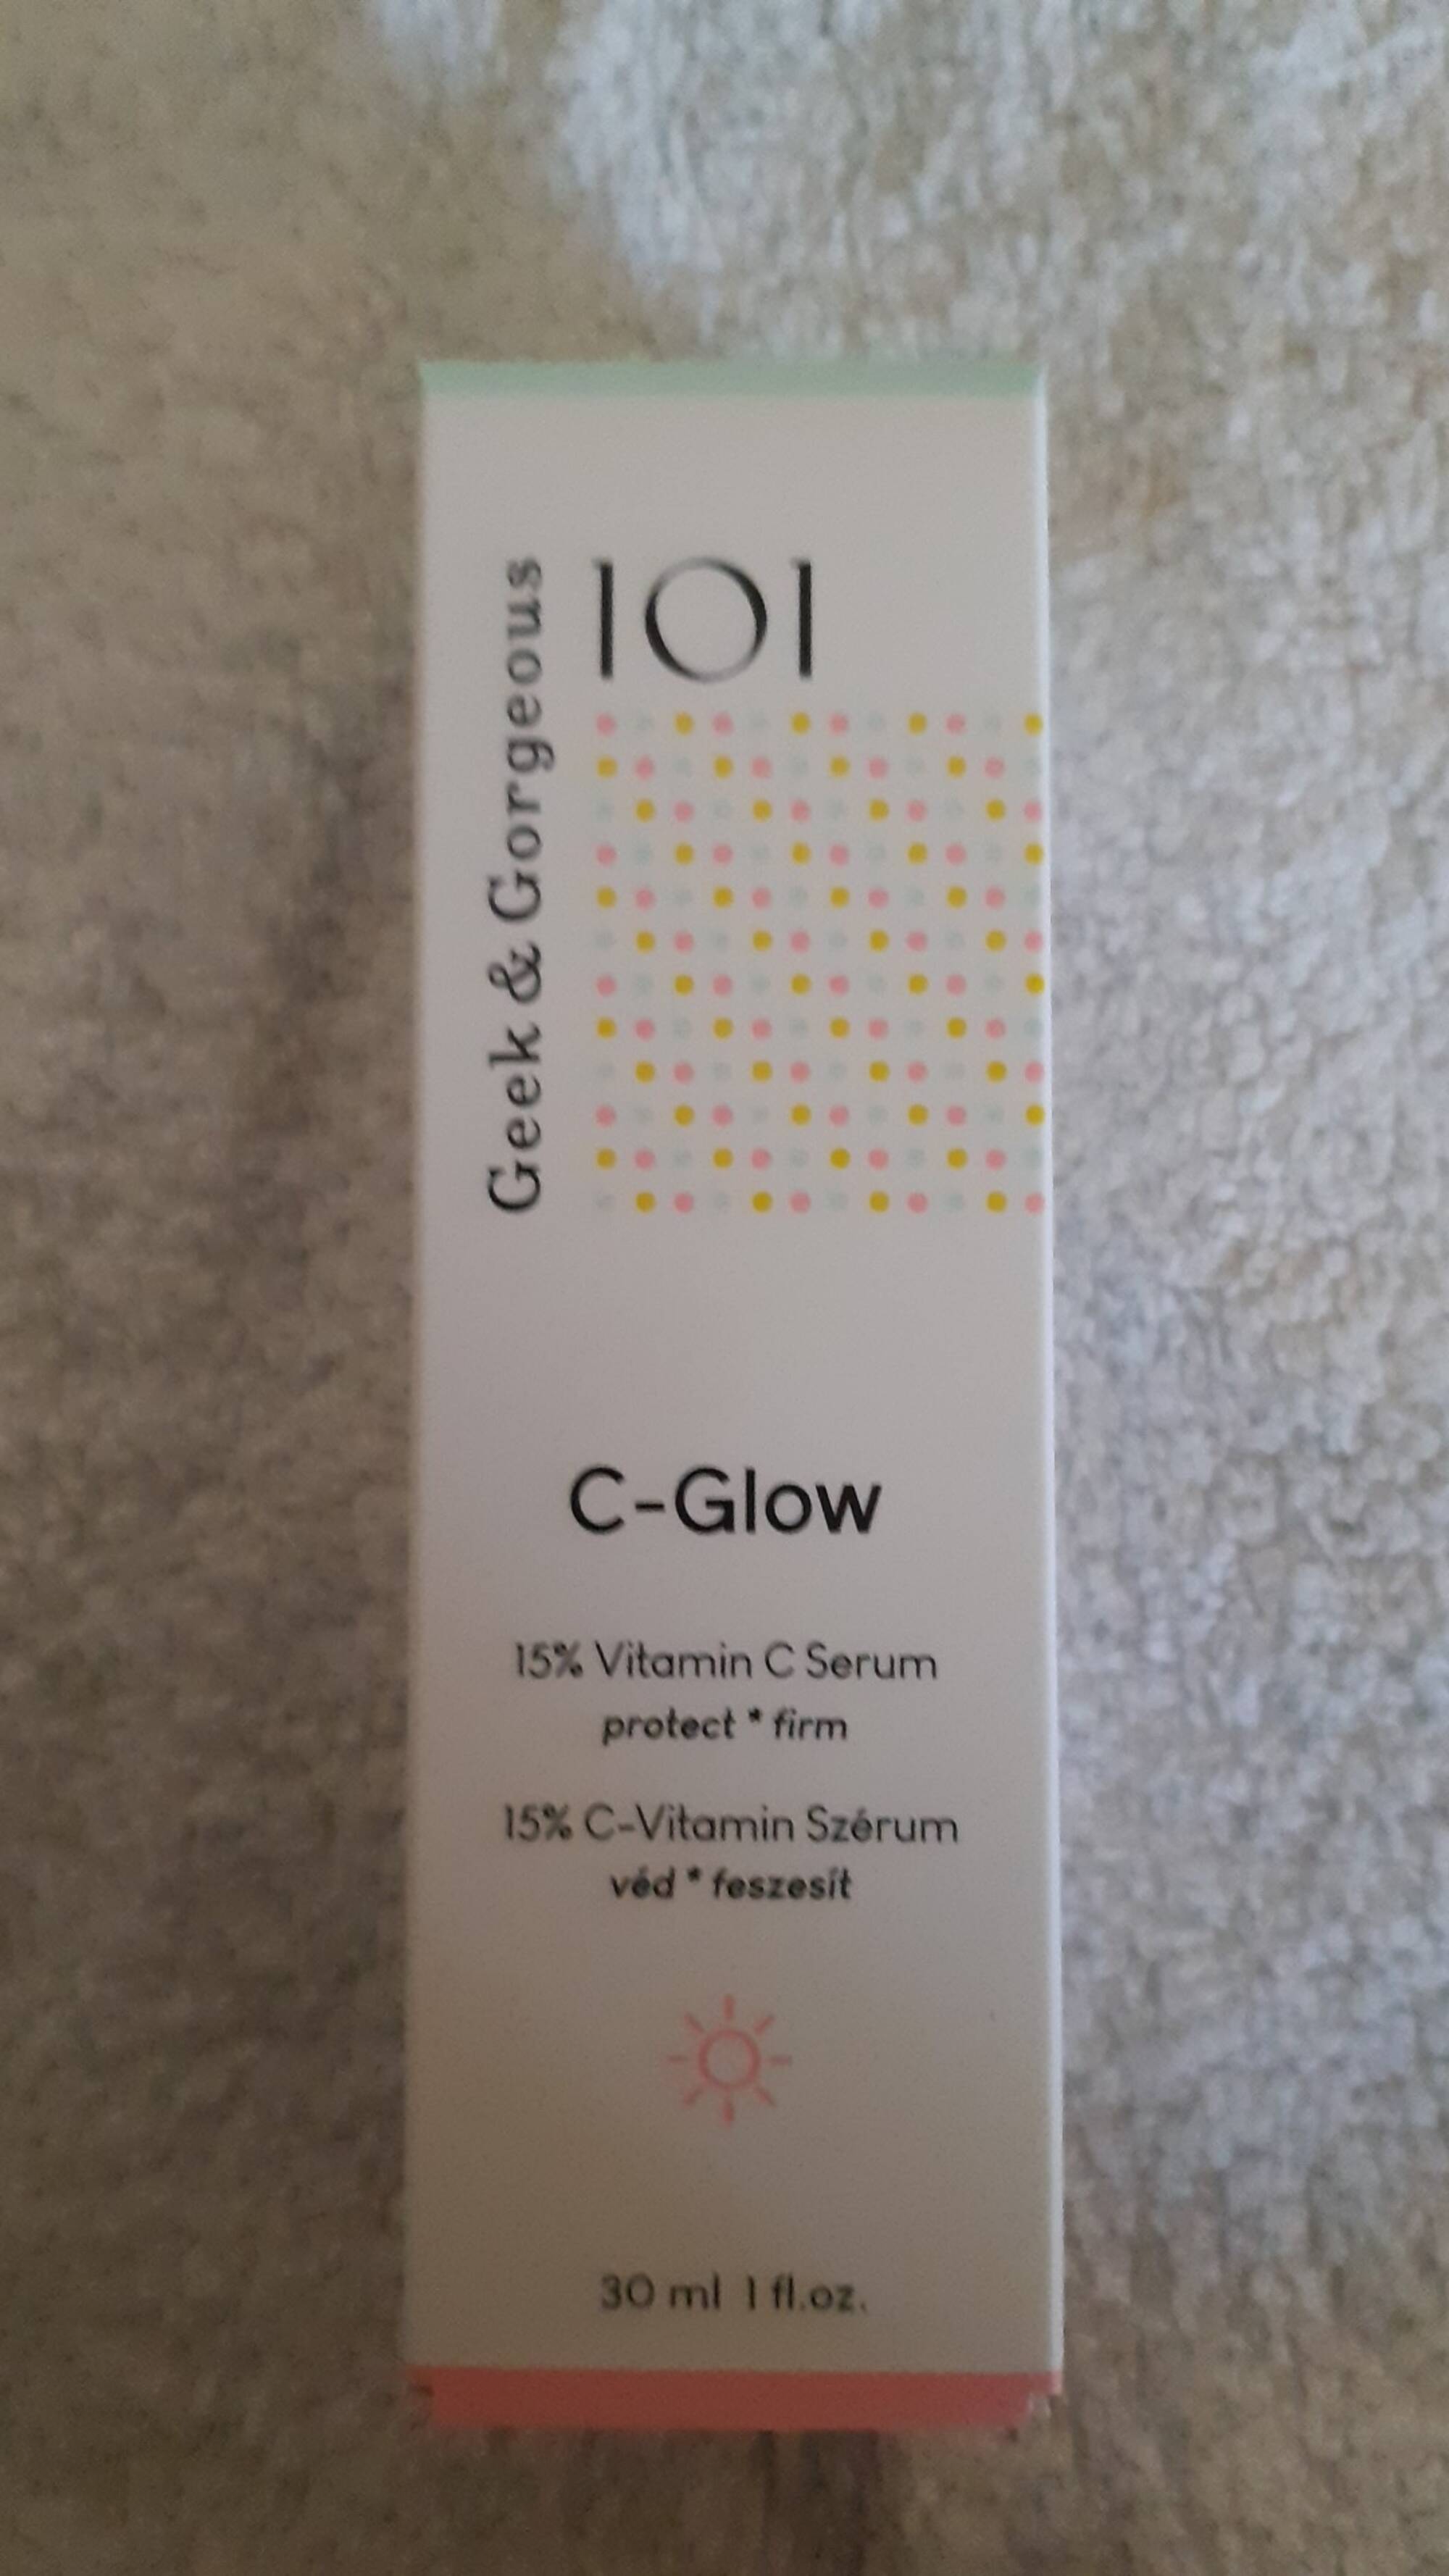 GEEK & GORGEOUS - 101 C-Glow - 15% Vitamin C sérum